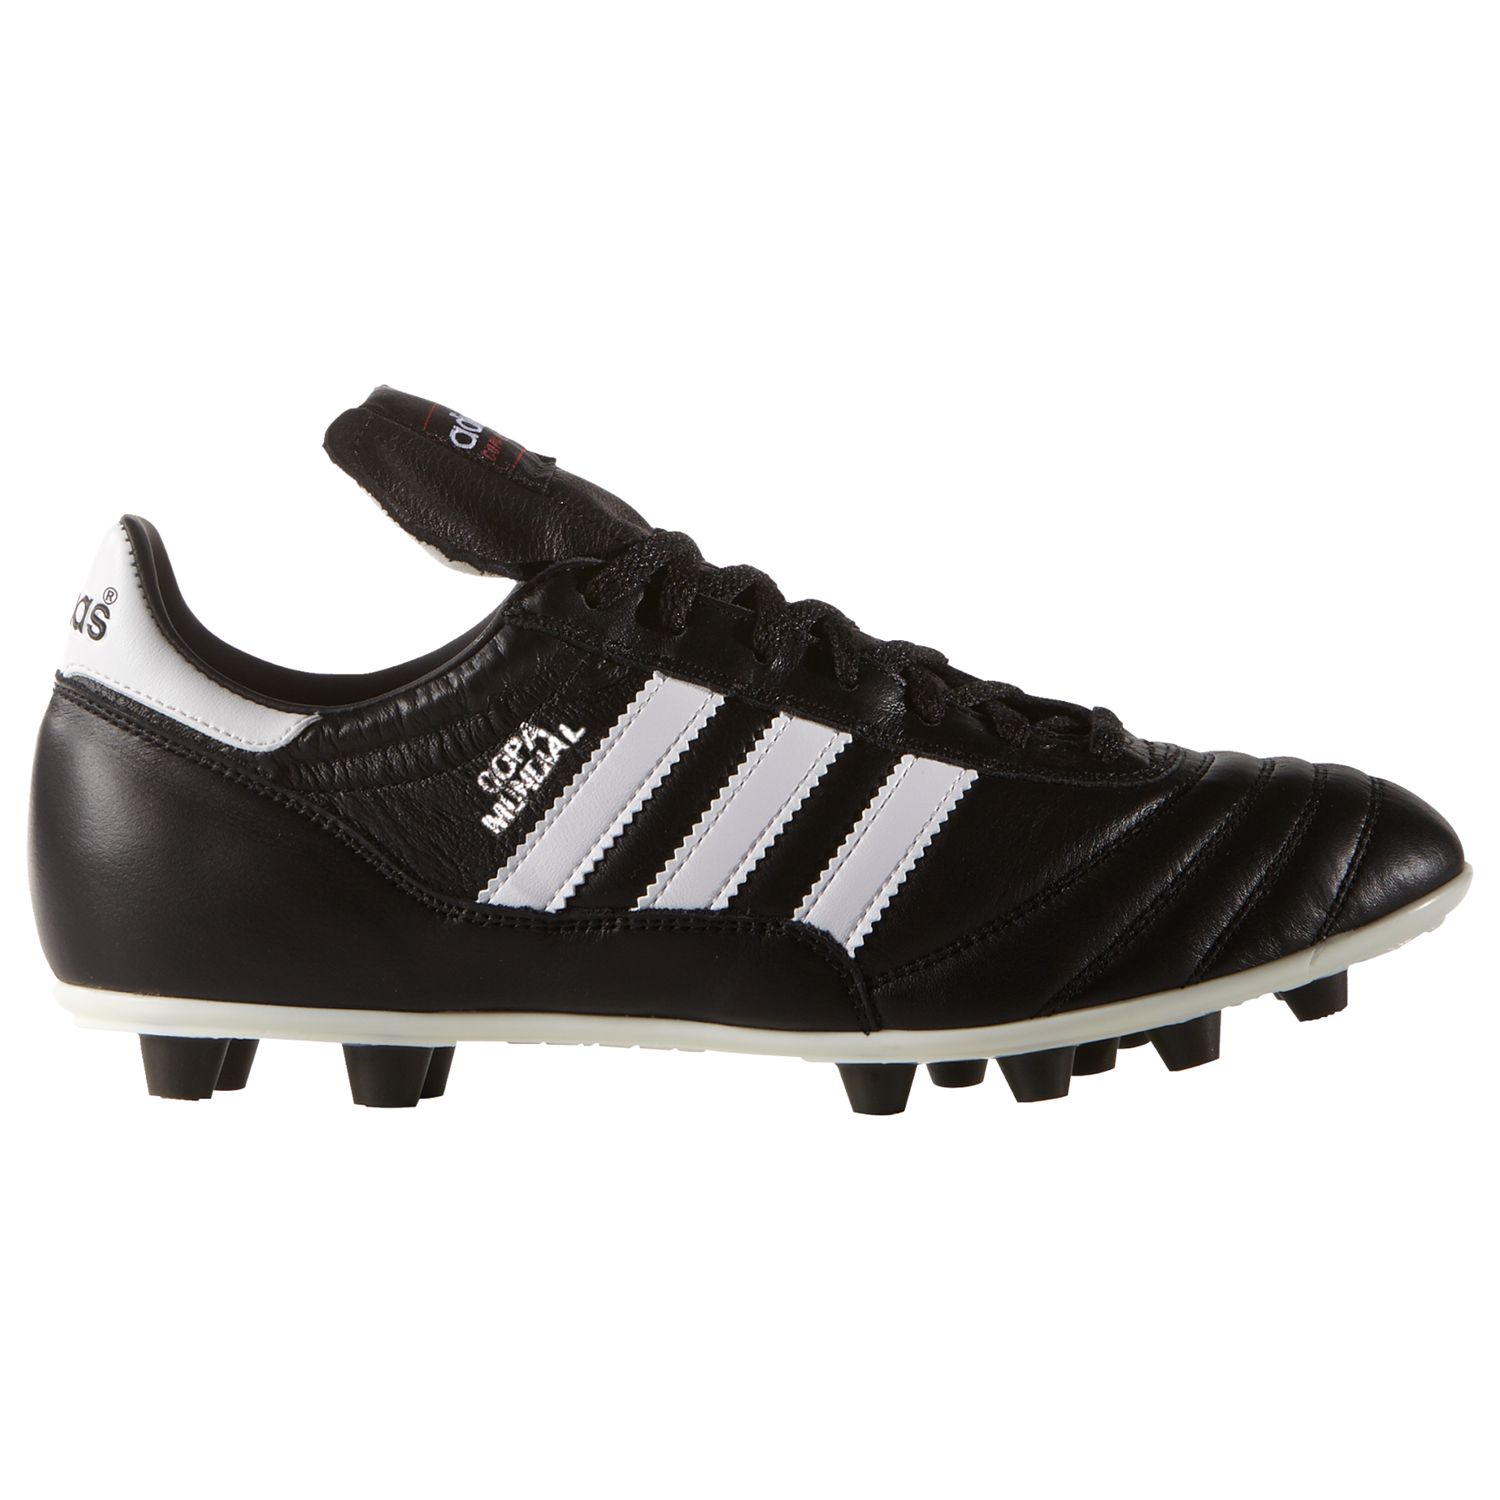 adidas football boots black friday